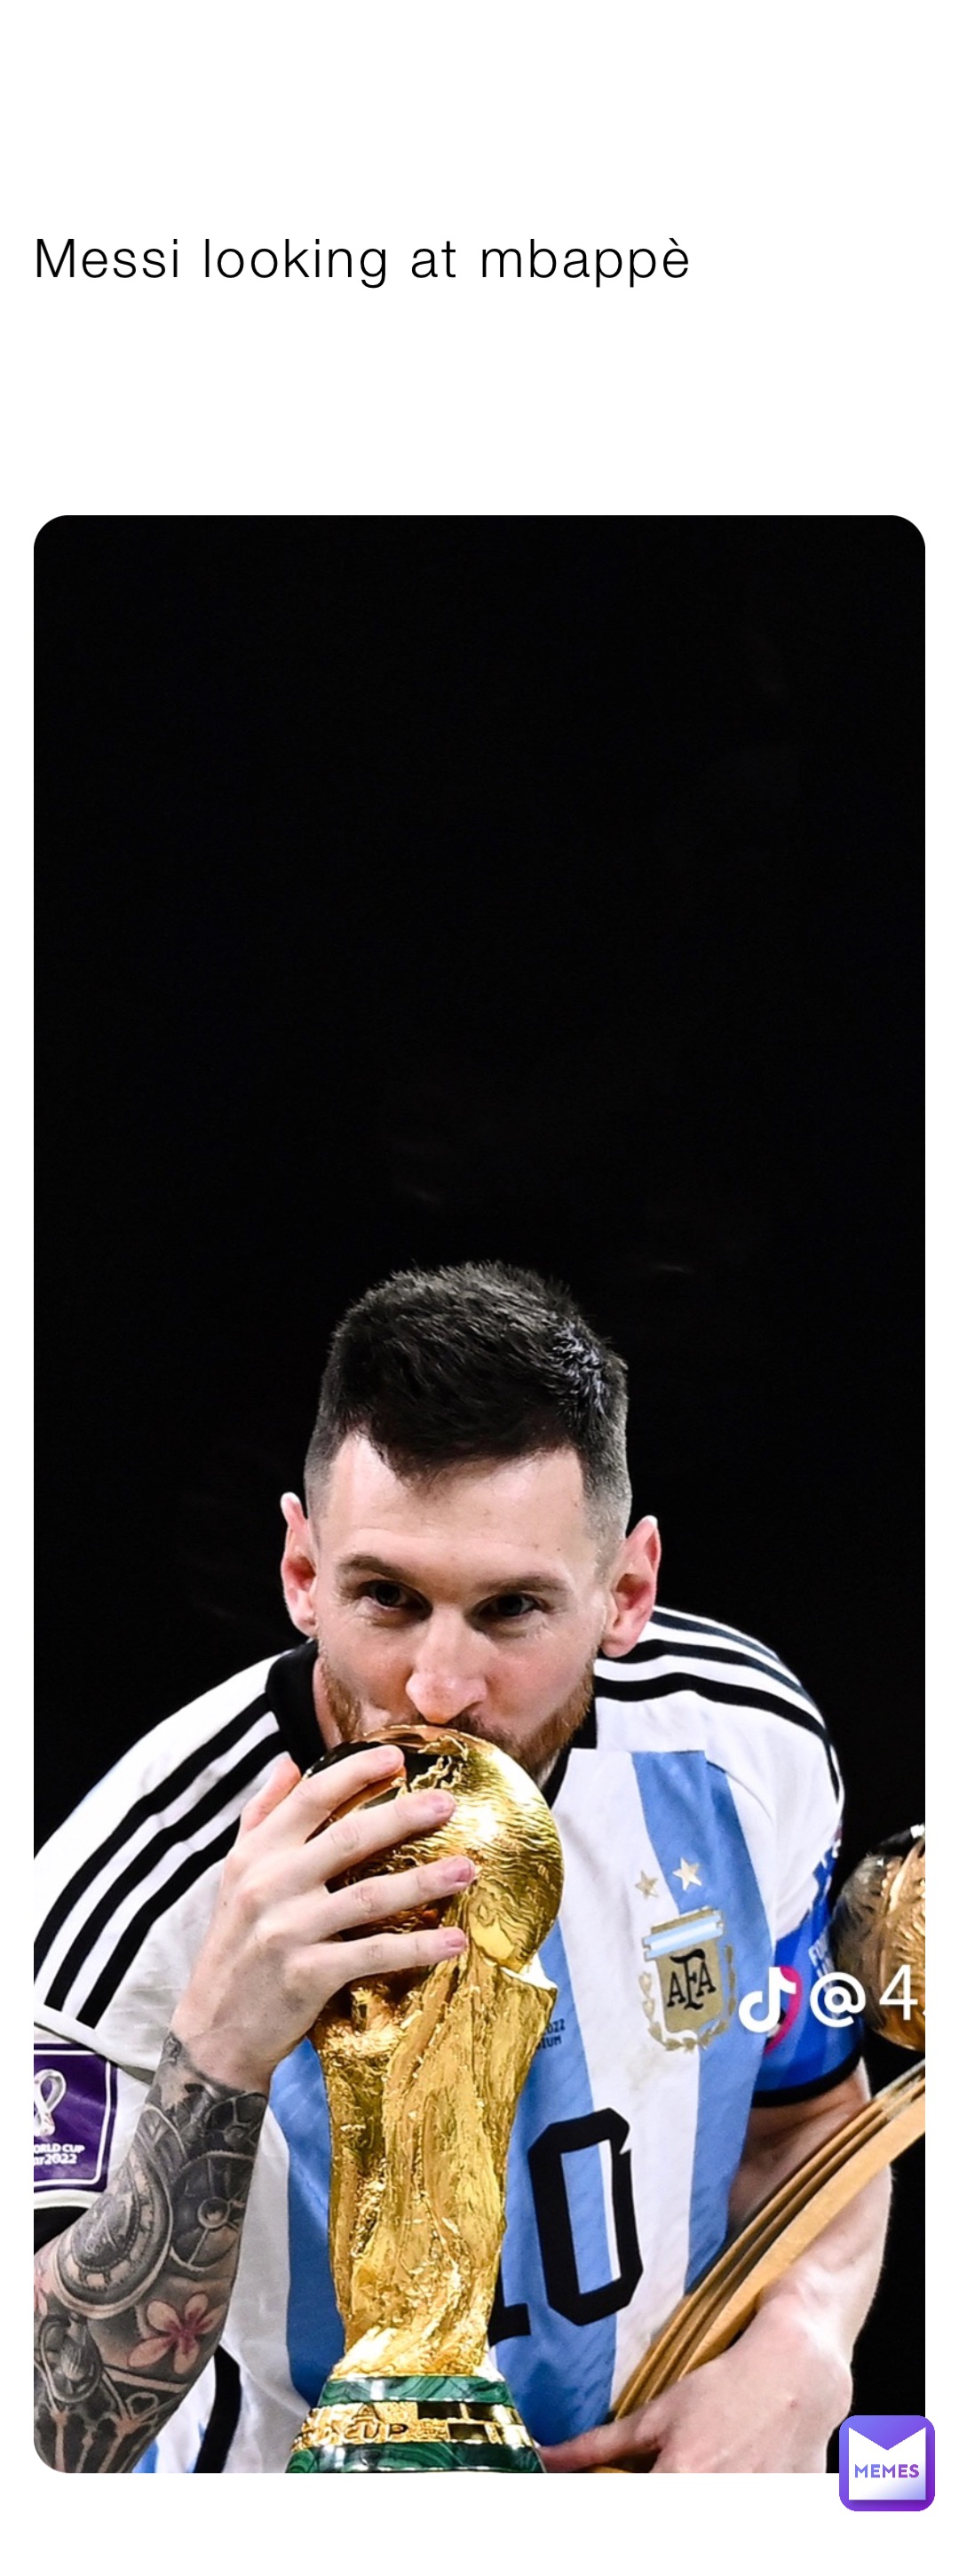 Messi looking at mbappè